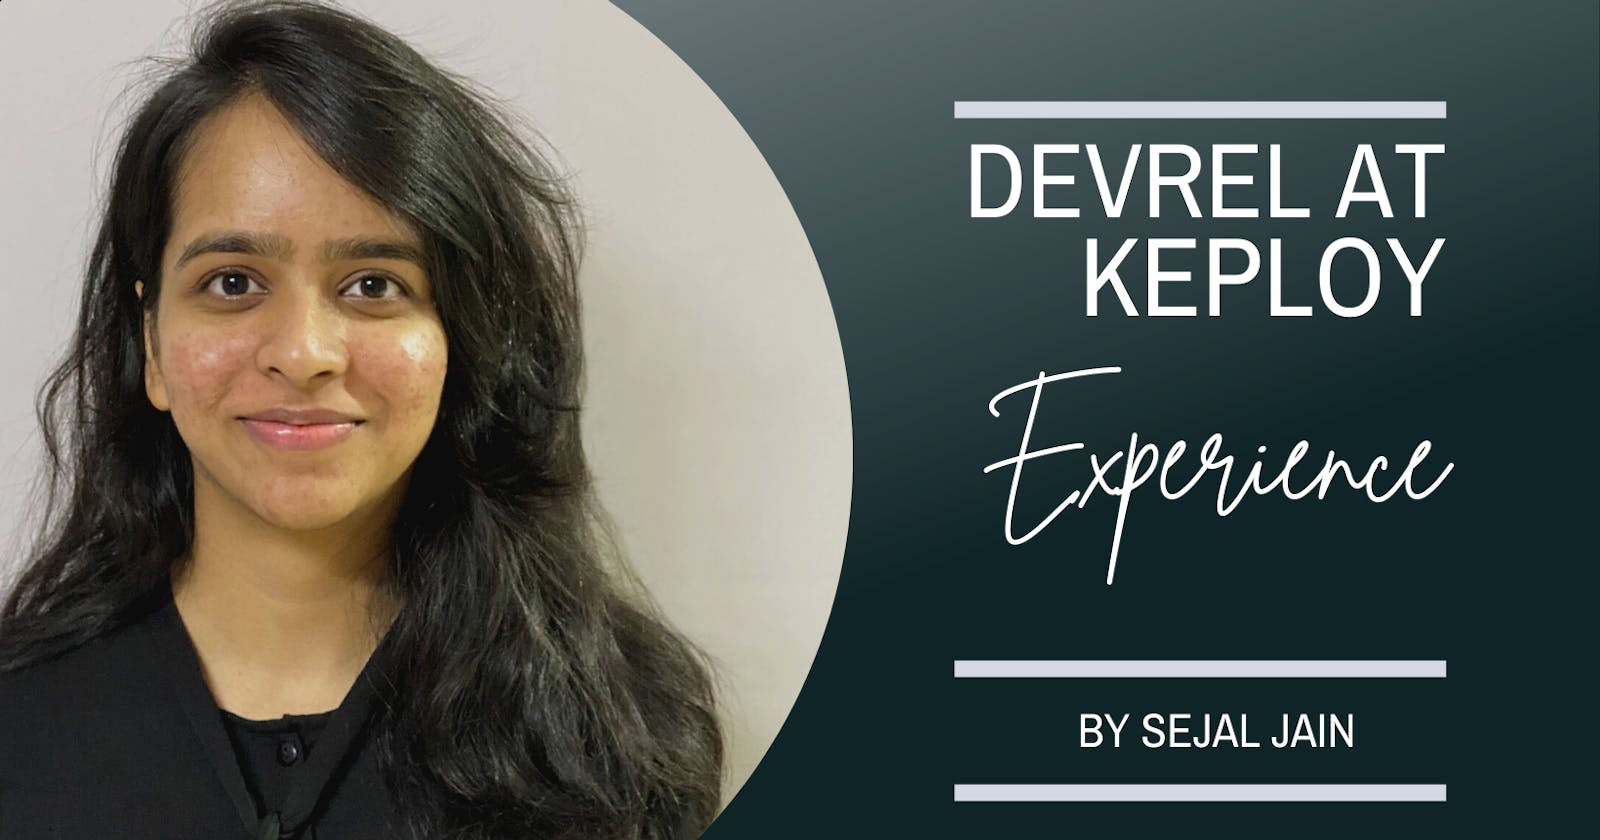 DevRel at Keploy - Experience